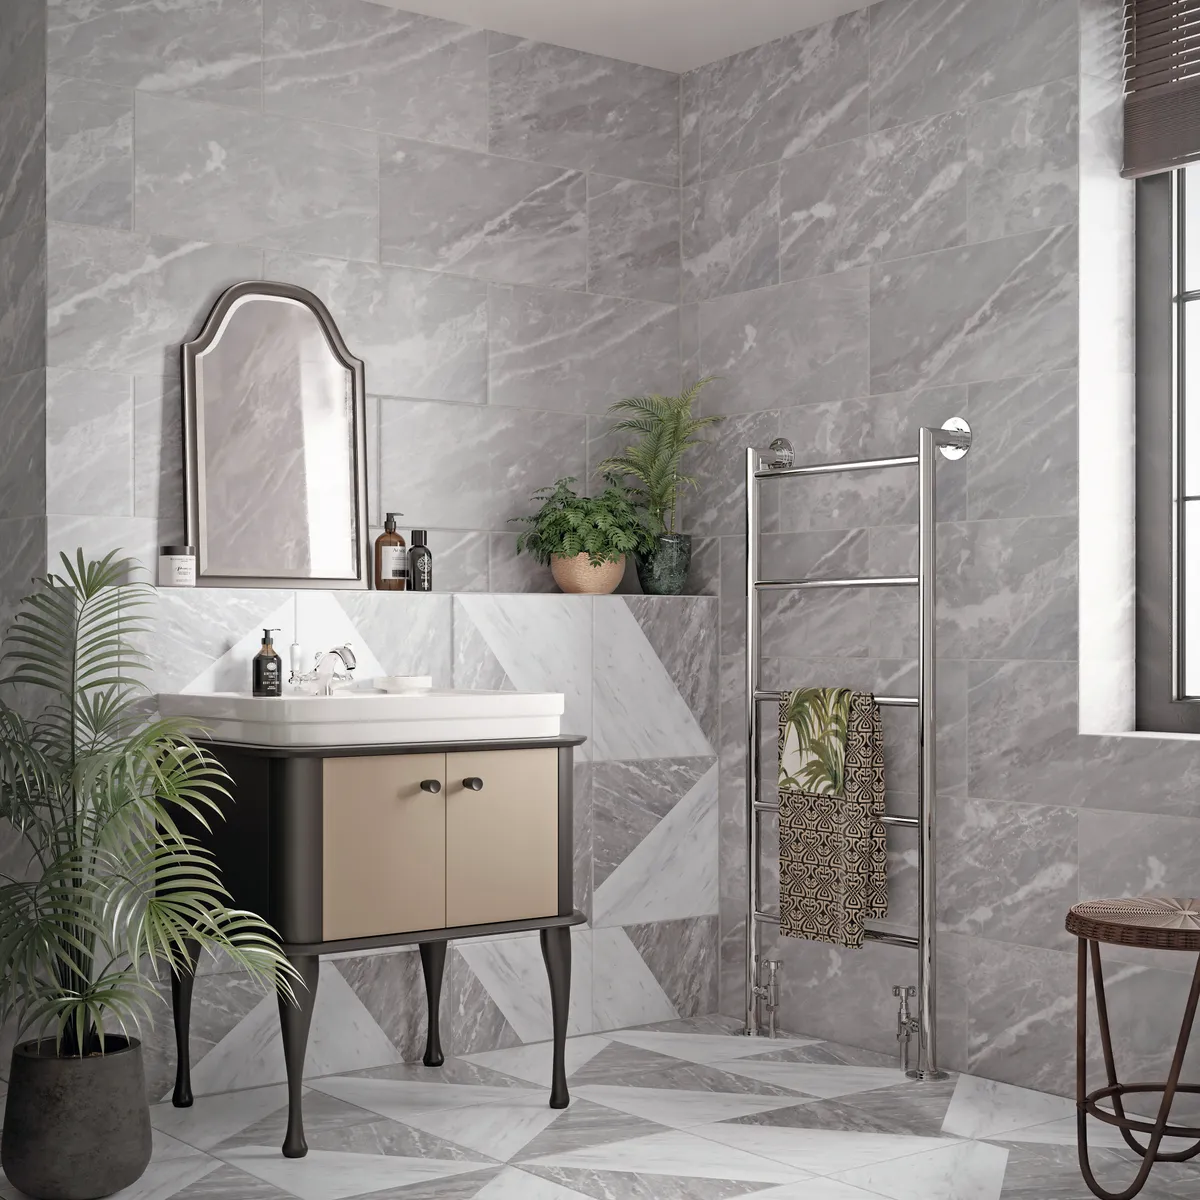 A modern bathroom with grey slate tiles and a silver heated towel rail